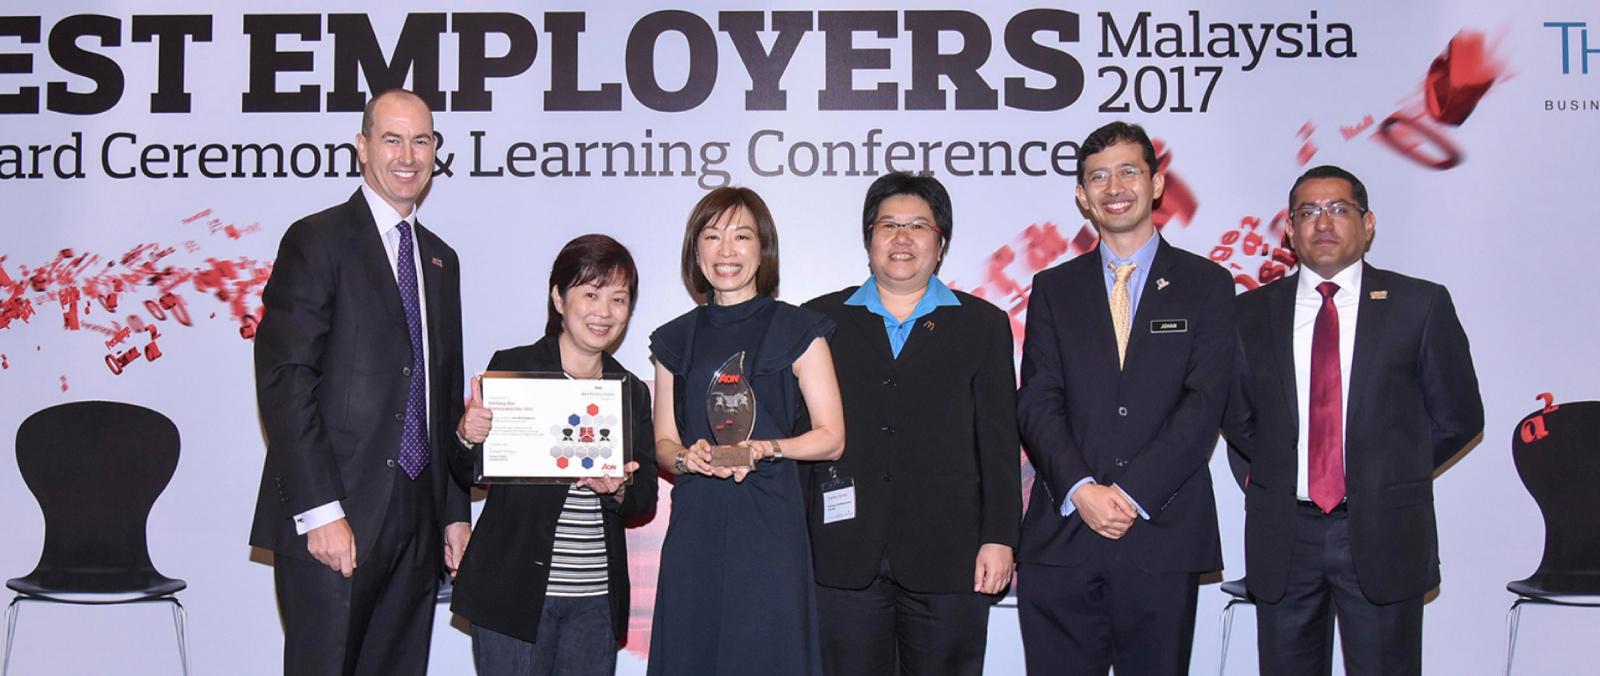 McDonald's® Malaysia Wins Best Employer Award's image'